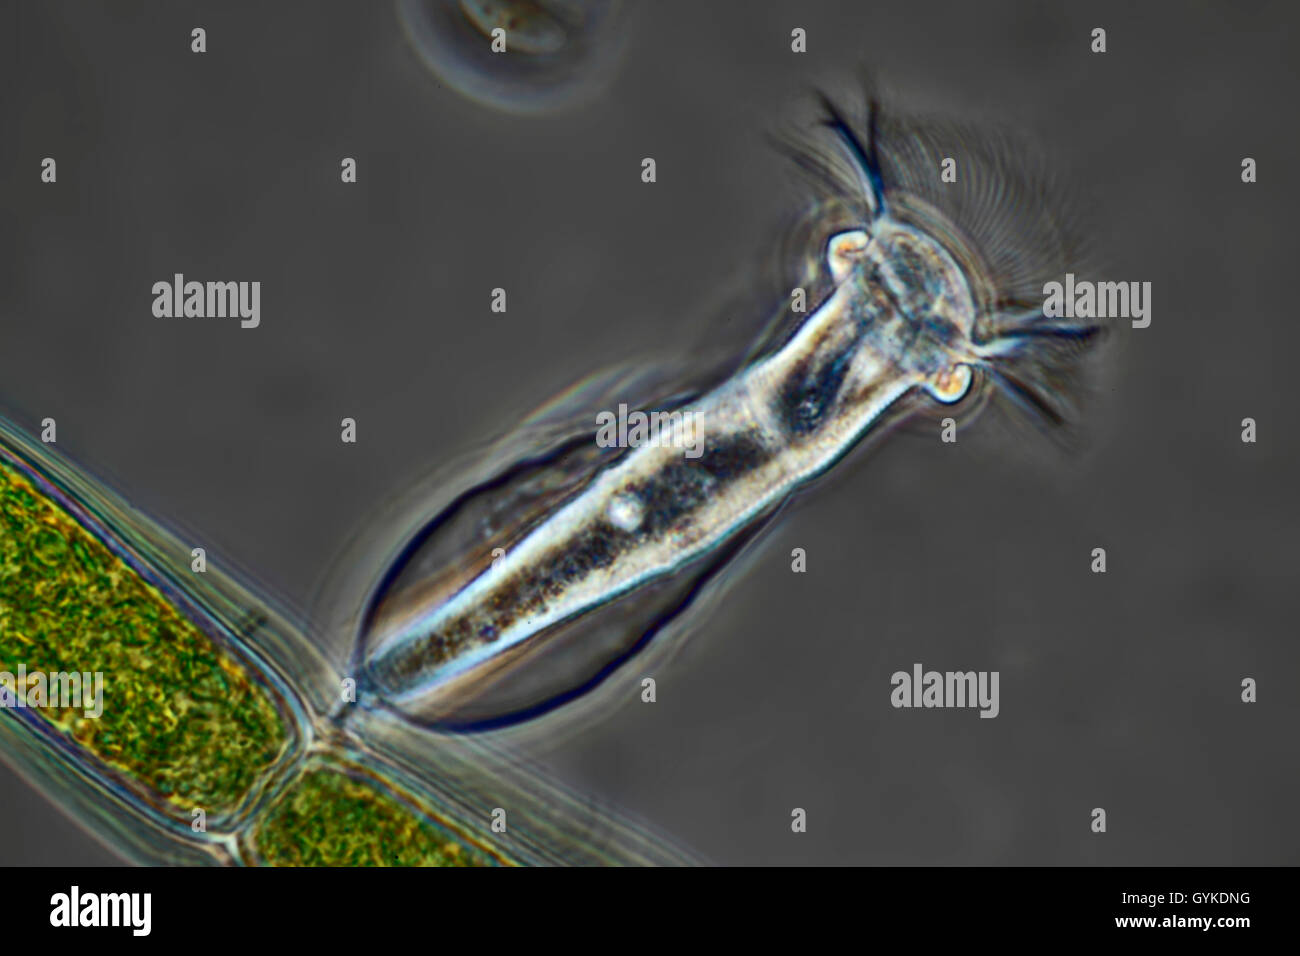 Beringtes Pokaltierchen (Cothurnia spec.), epibiontisch auf einer Alge | Protozoan (Cothurnia spec.), epibiontic on an alga | BL Stock Photo